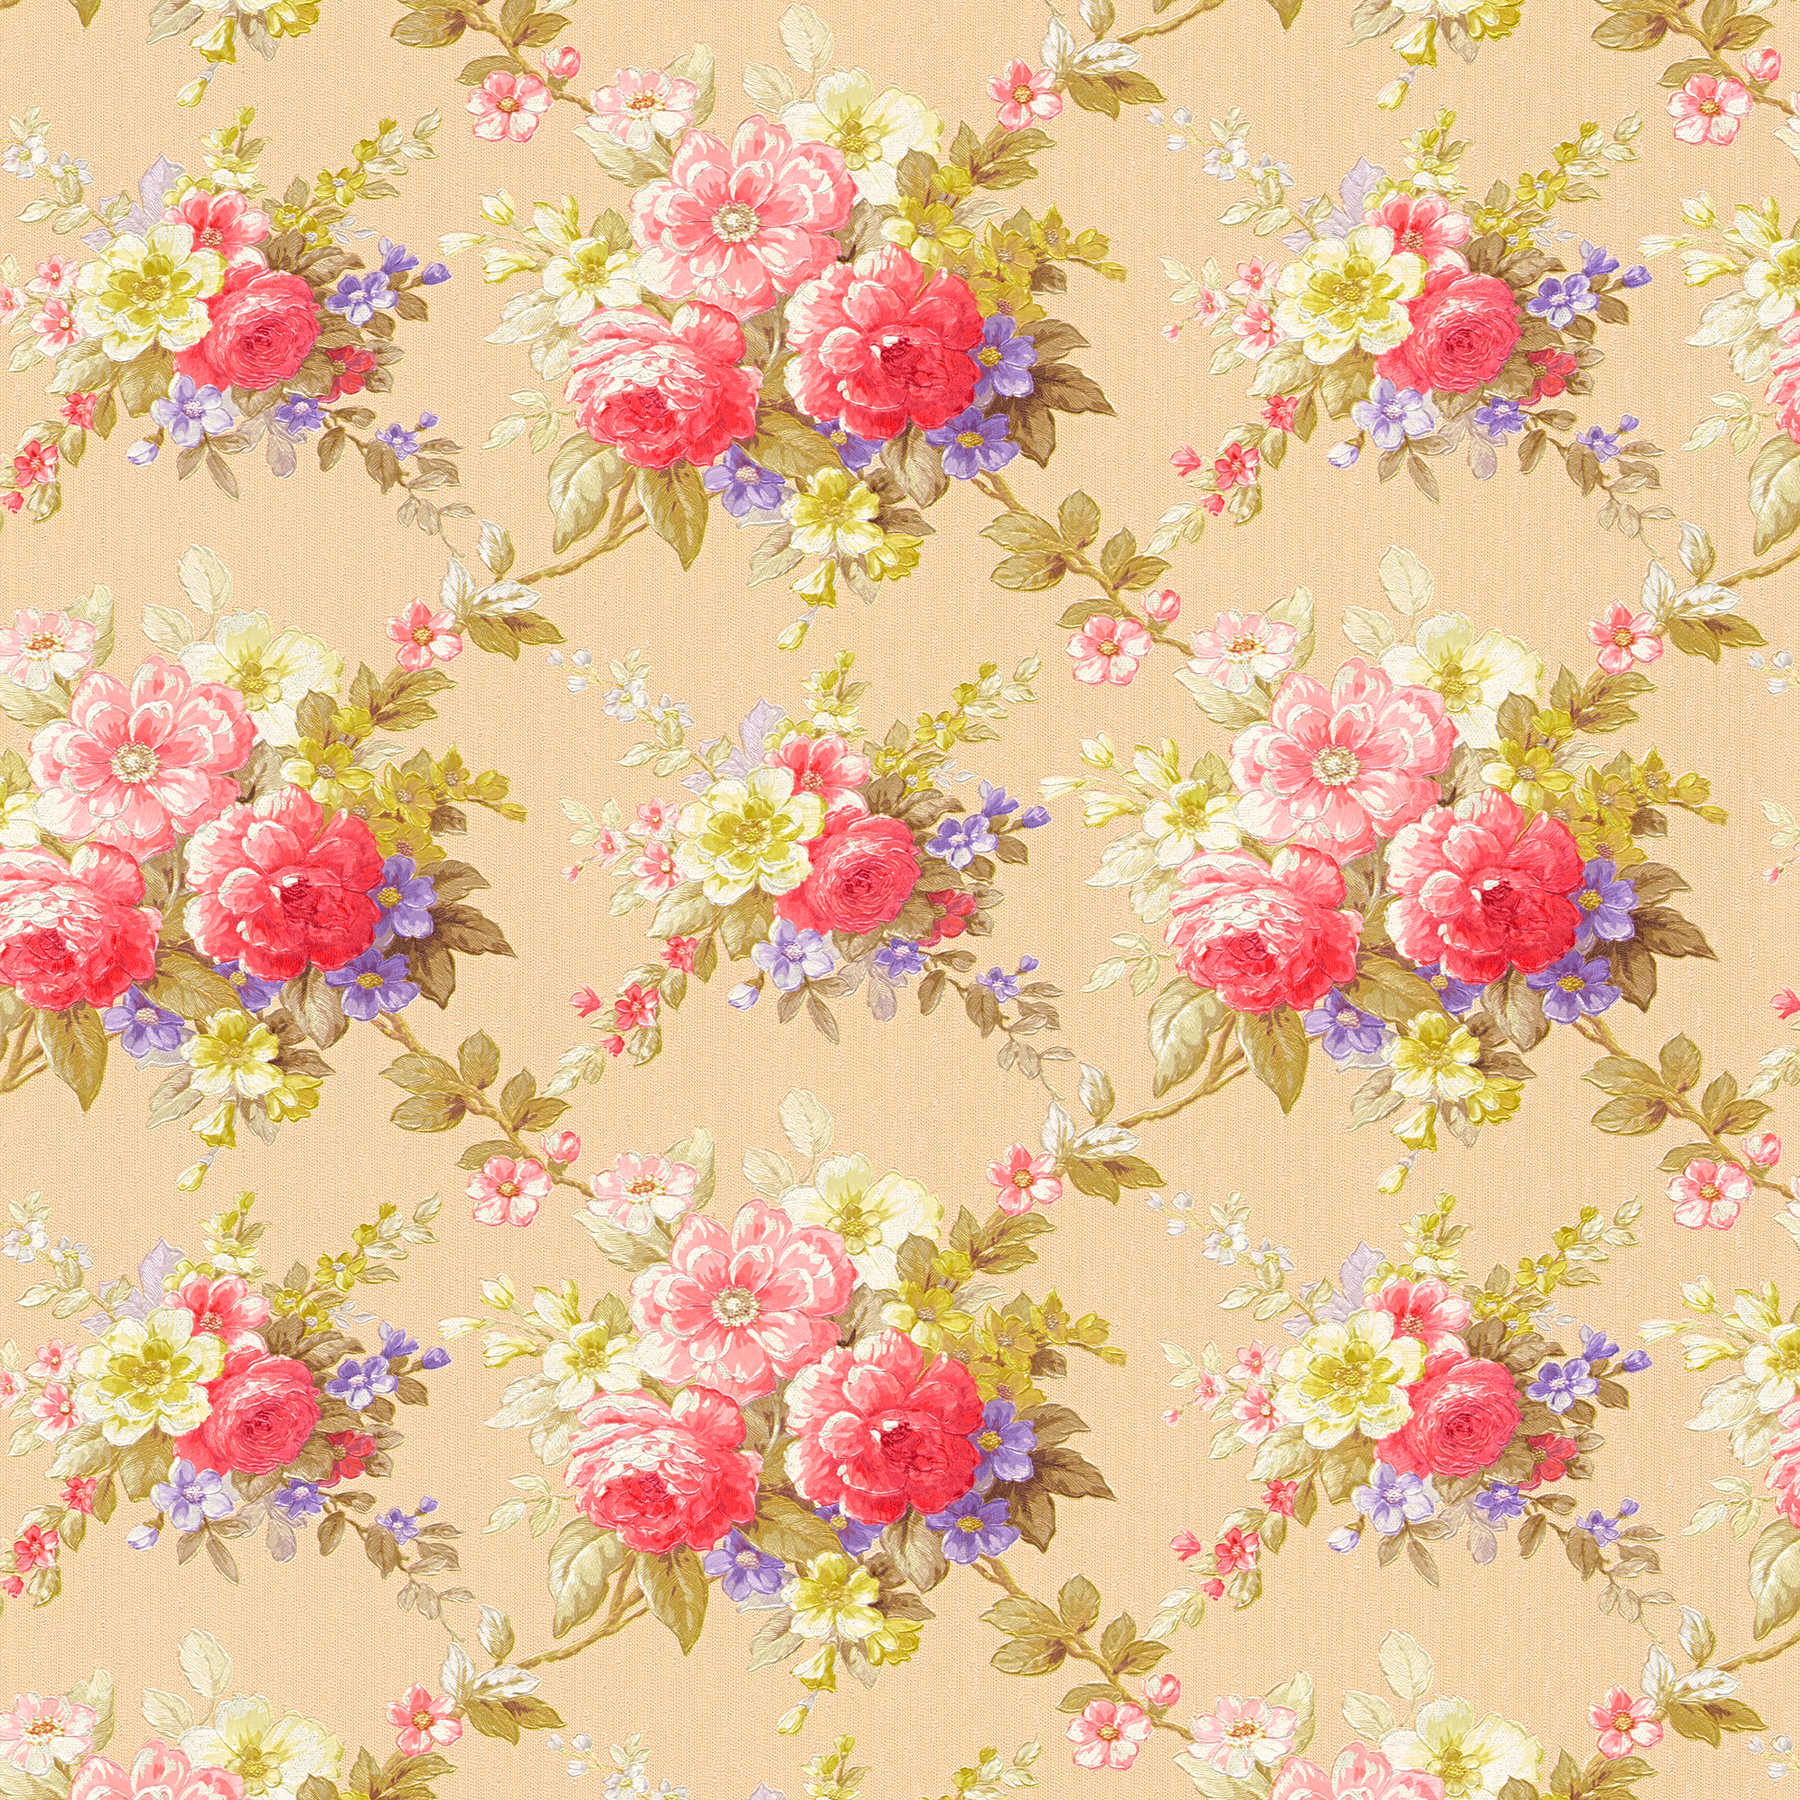         Tapeten Rosen-Ornamente florales Bouquet Muster – Bunt, Metallic
    